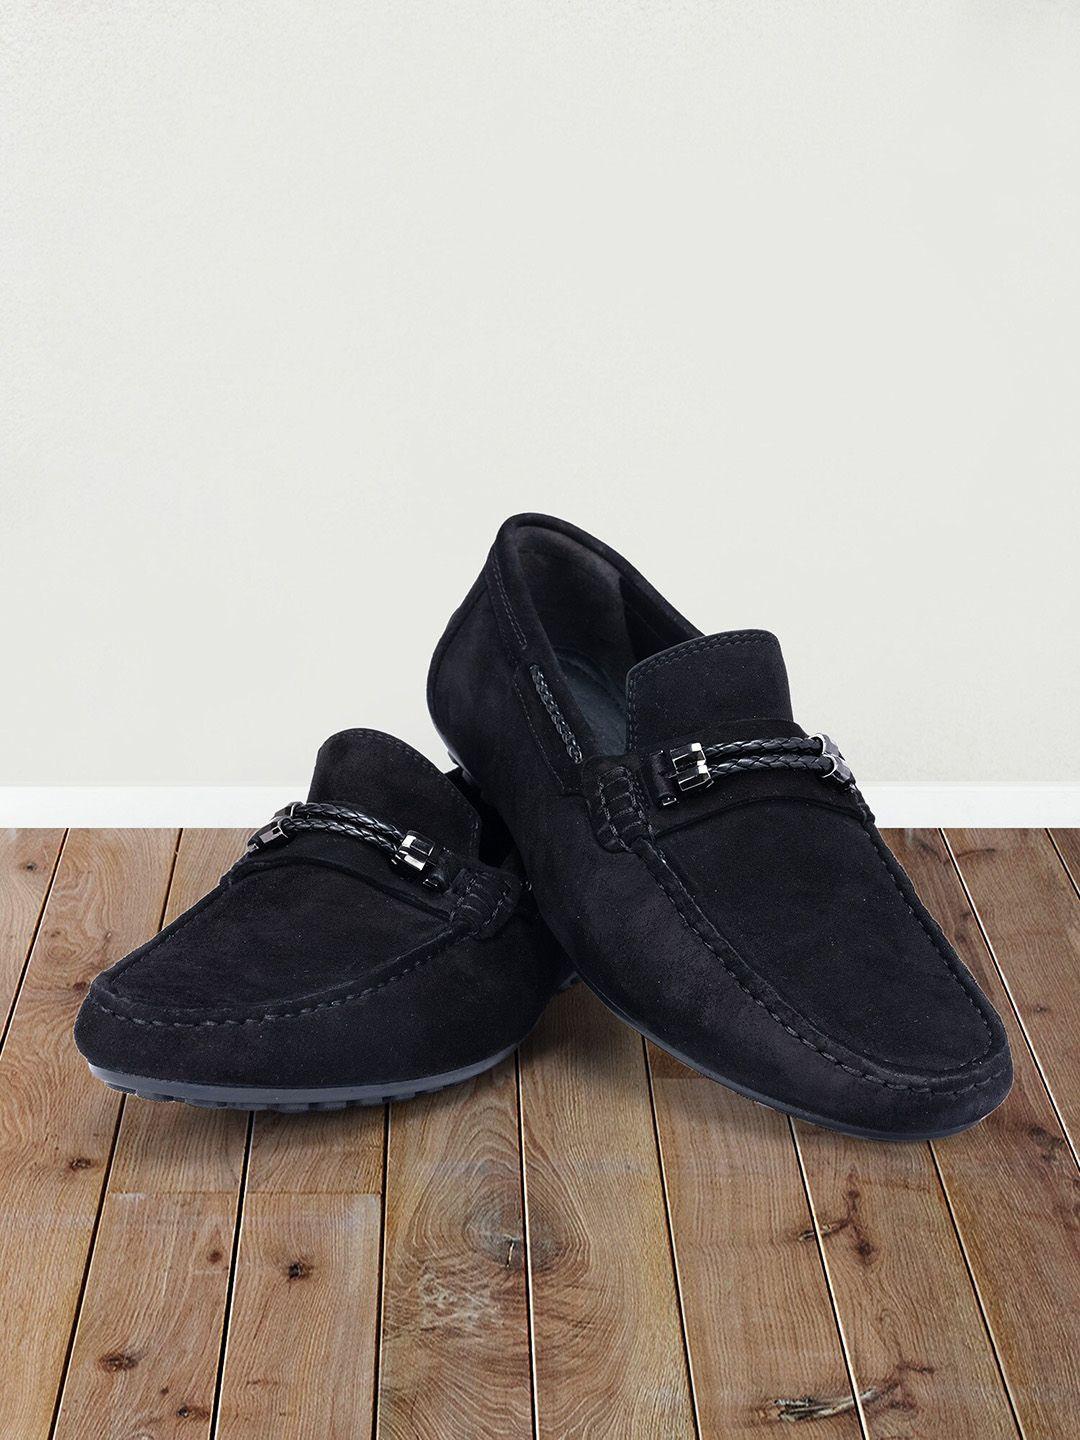 ROSSO BRUNELLO Men Leather Formal Horsebit Loafers